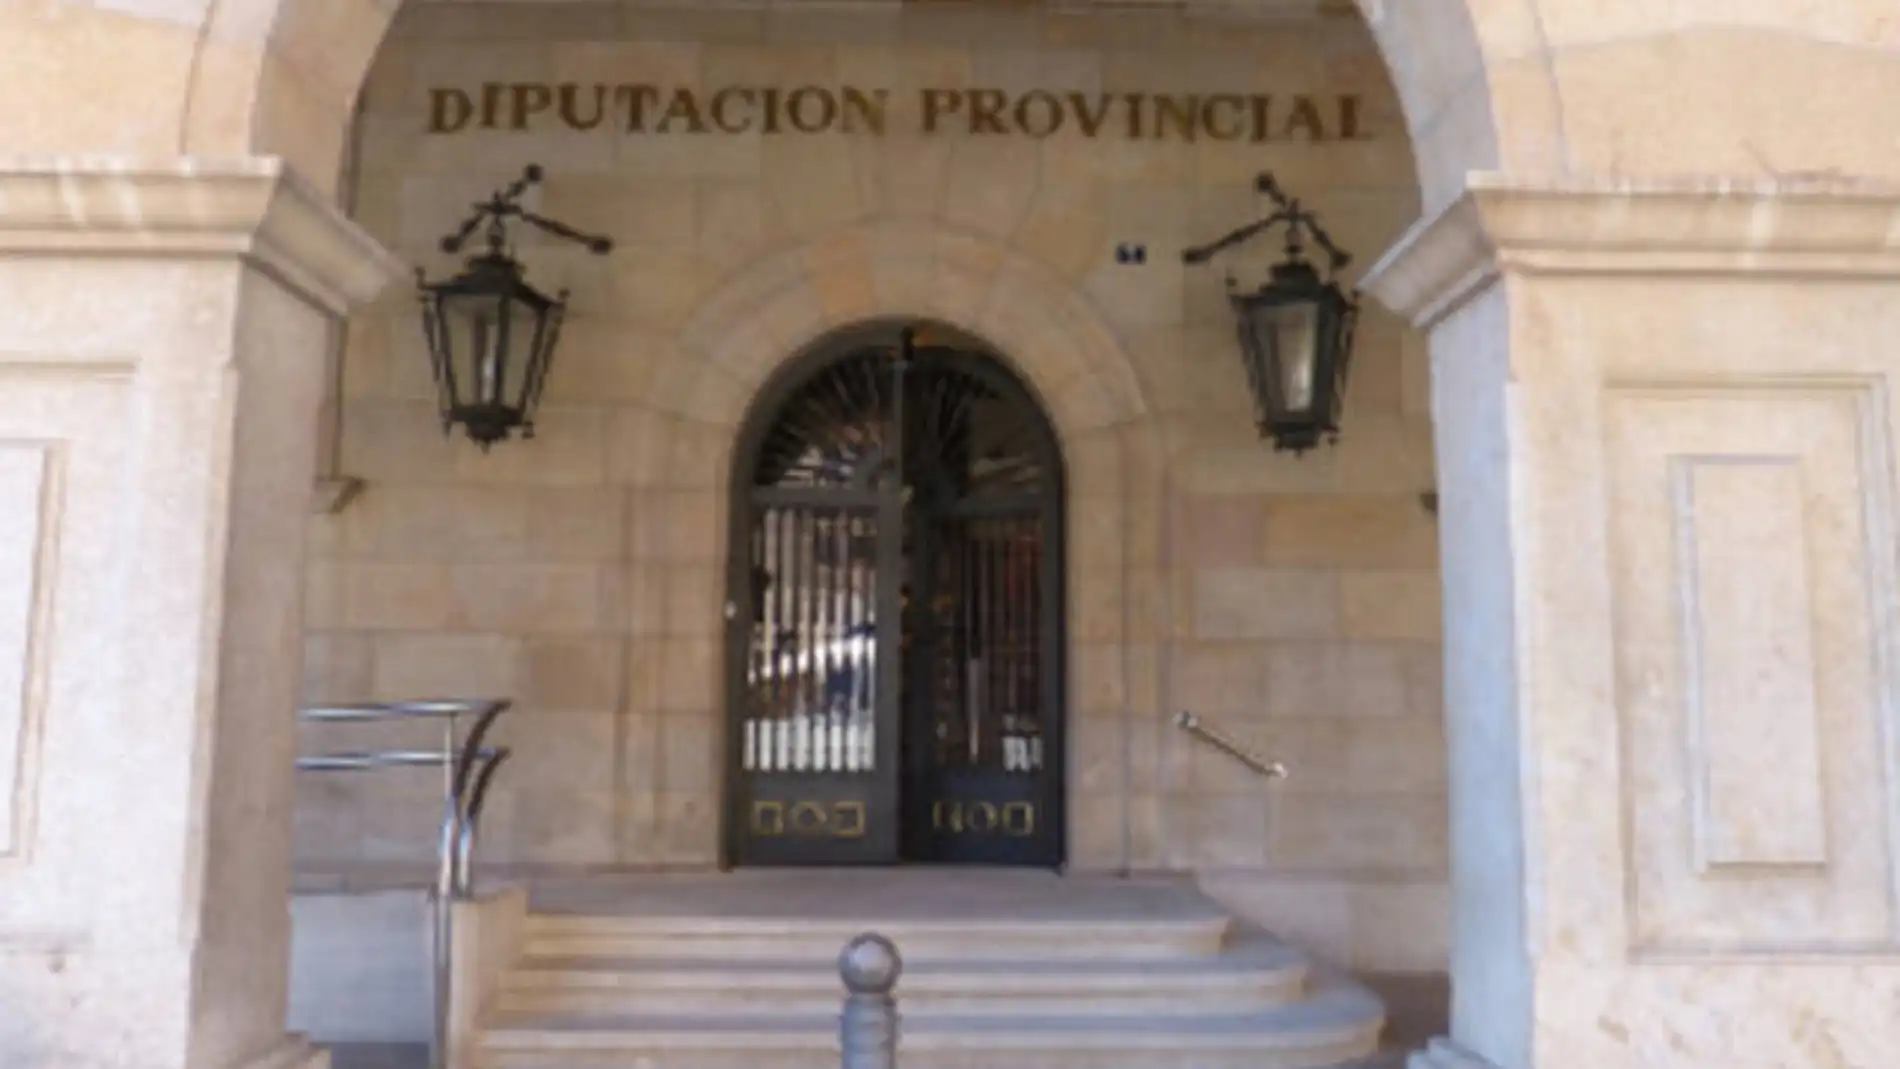 Diputación de Teruel